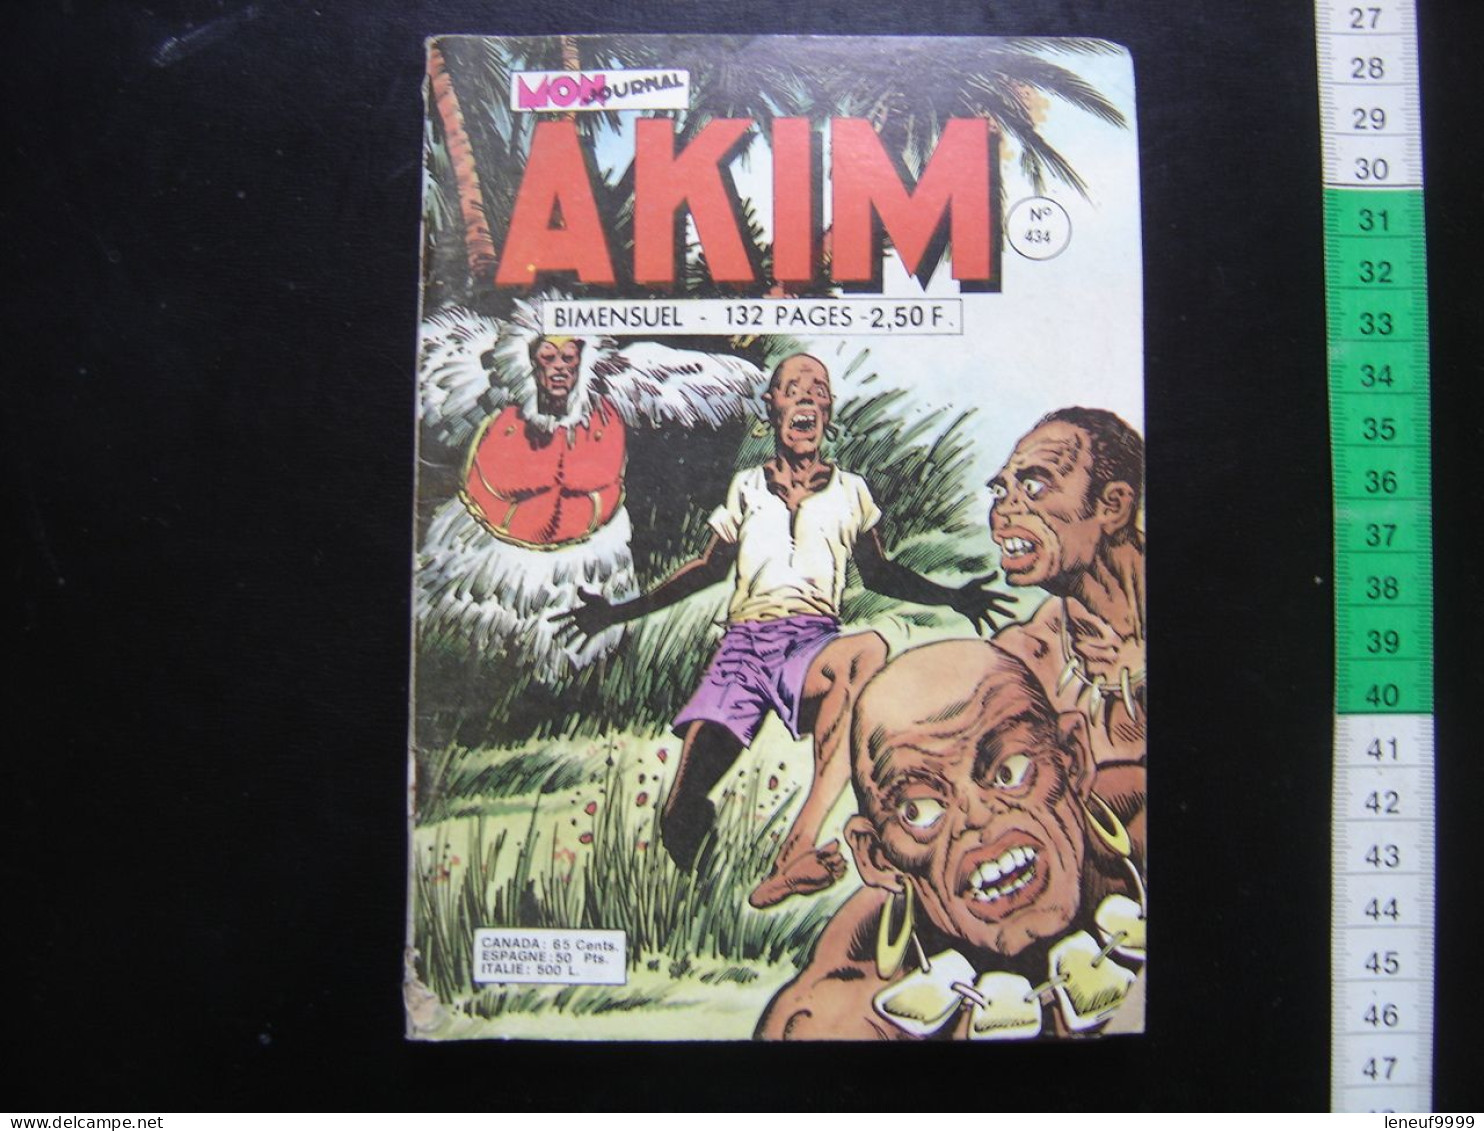 1977 AKIM 434 Editions MON JOURNAL - Akim